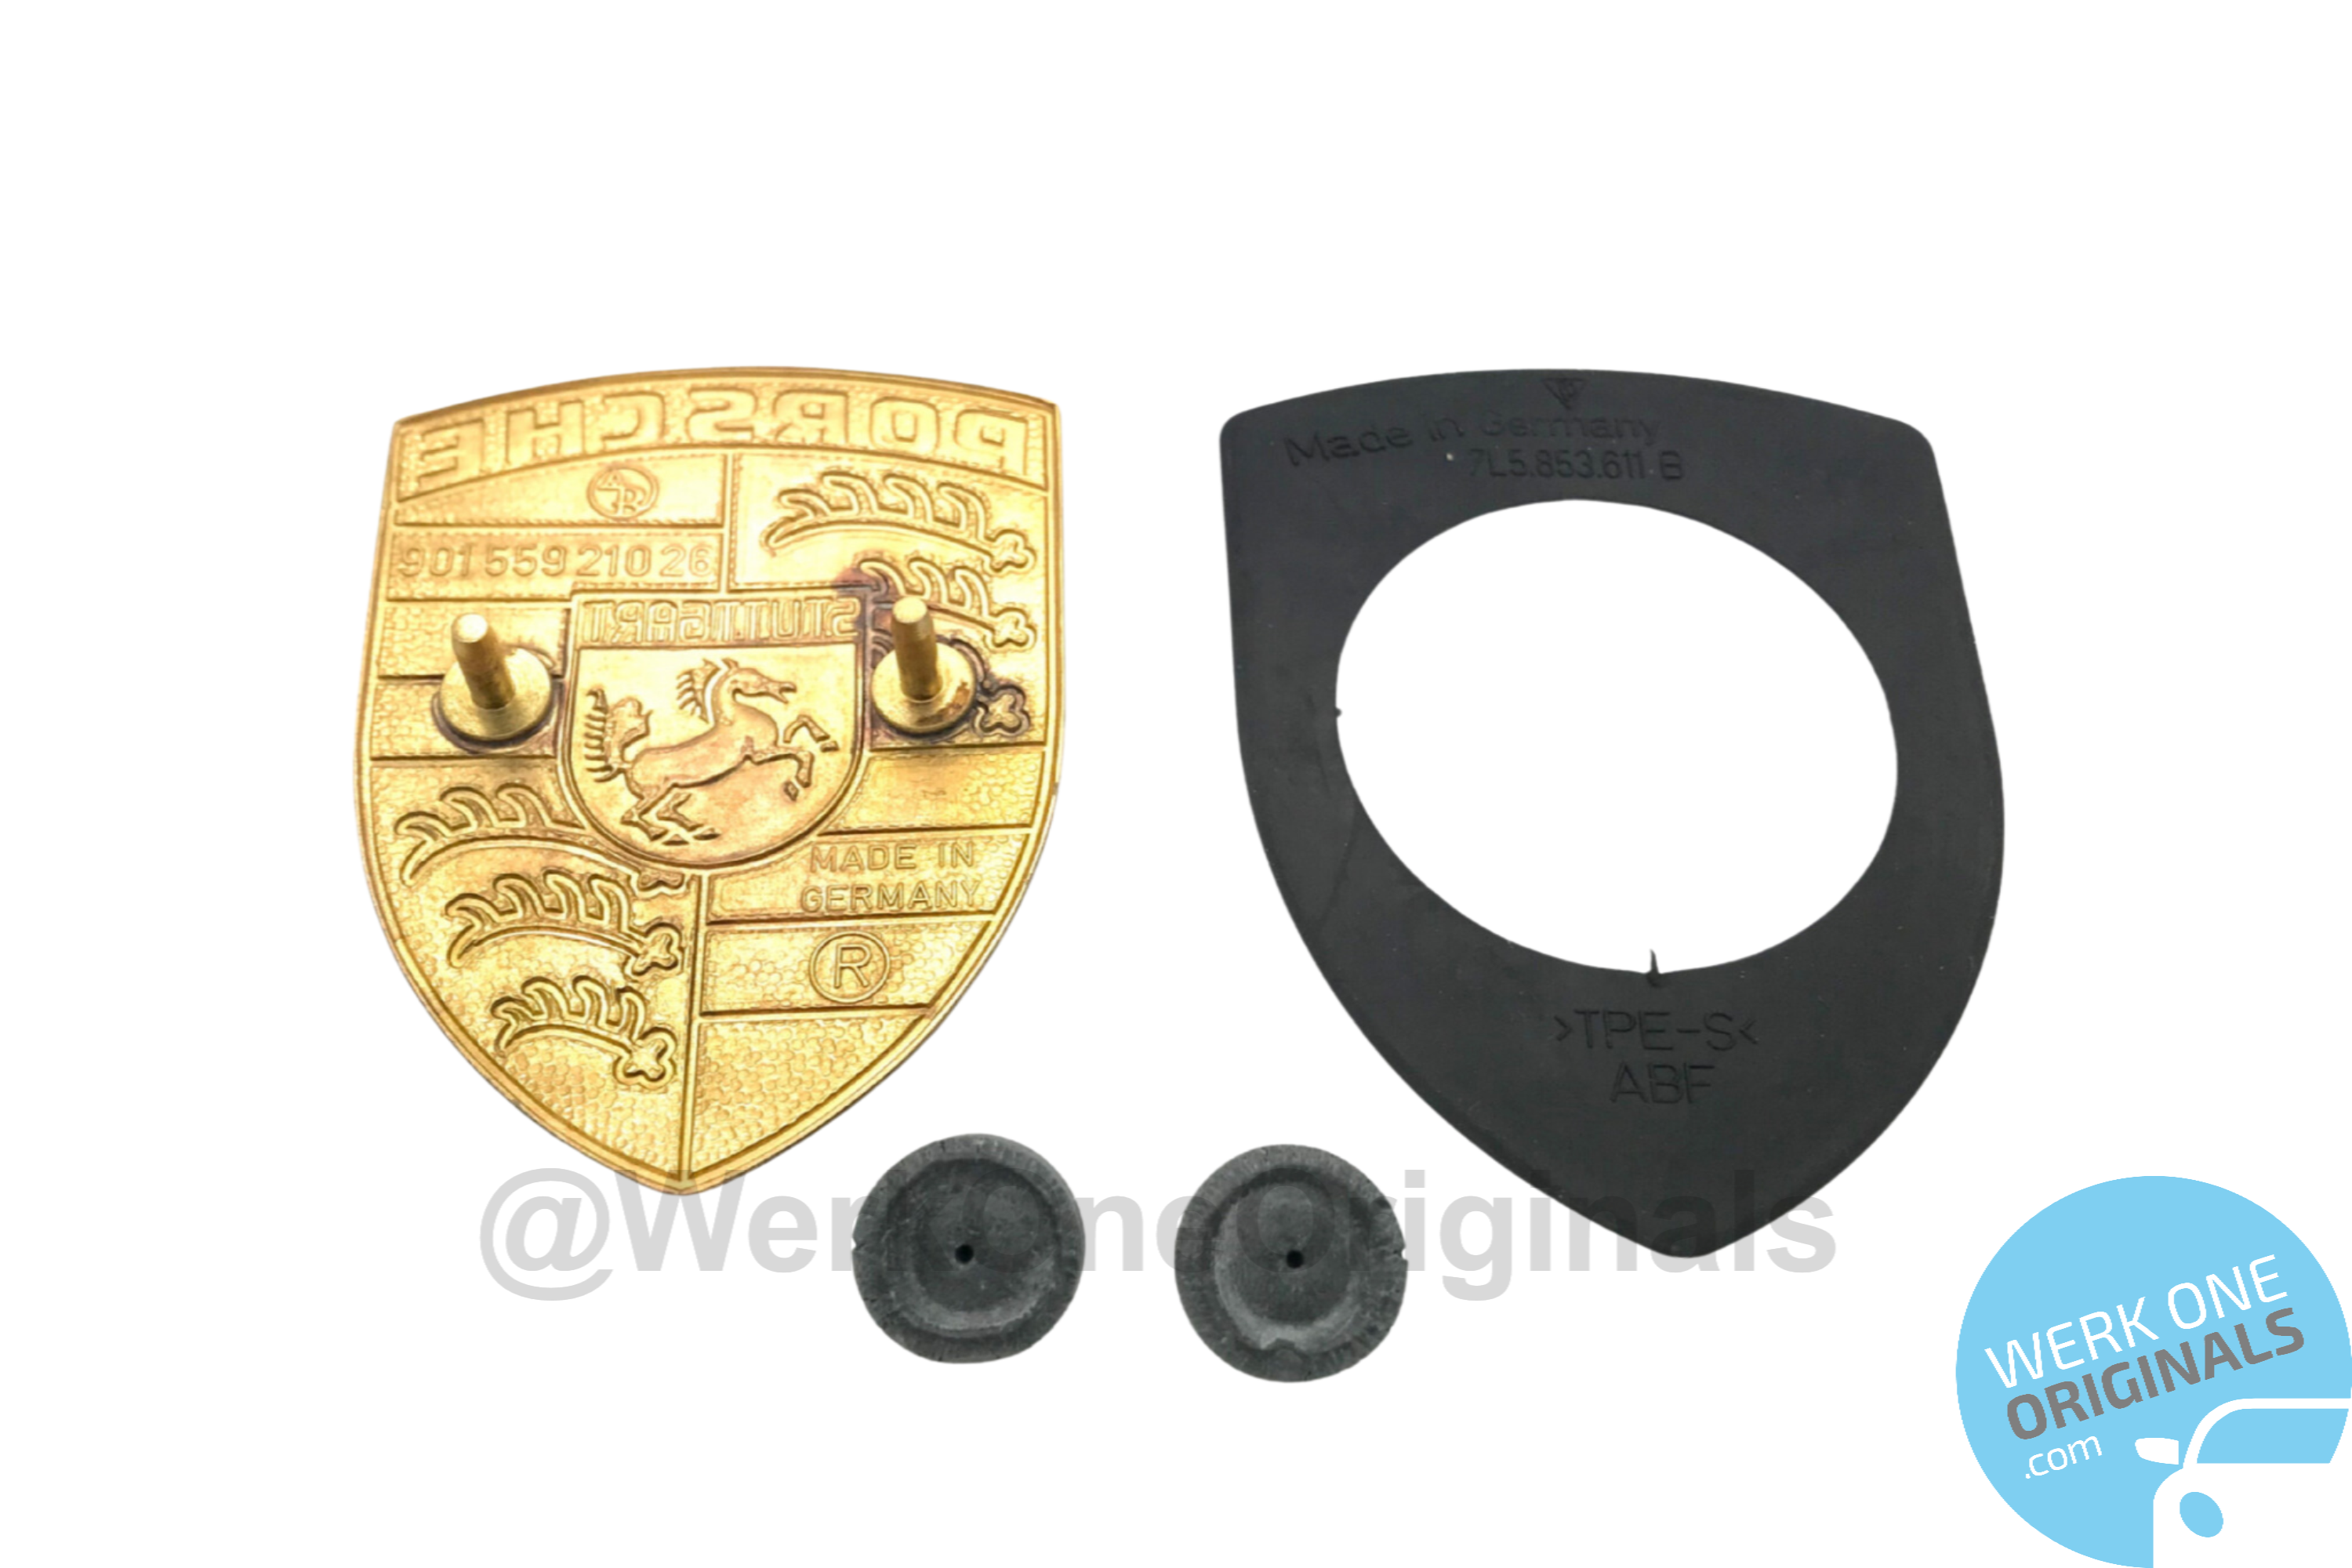 Porsche Crest Bonnet / Boot Badge with Grommet and Fixings for Porsche 959 Models